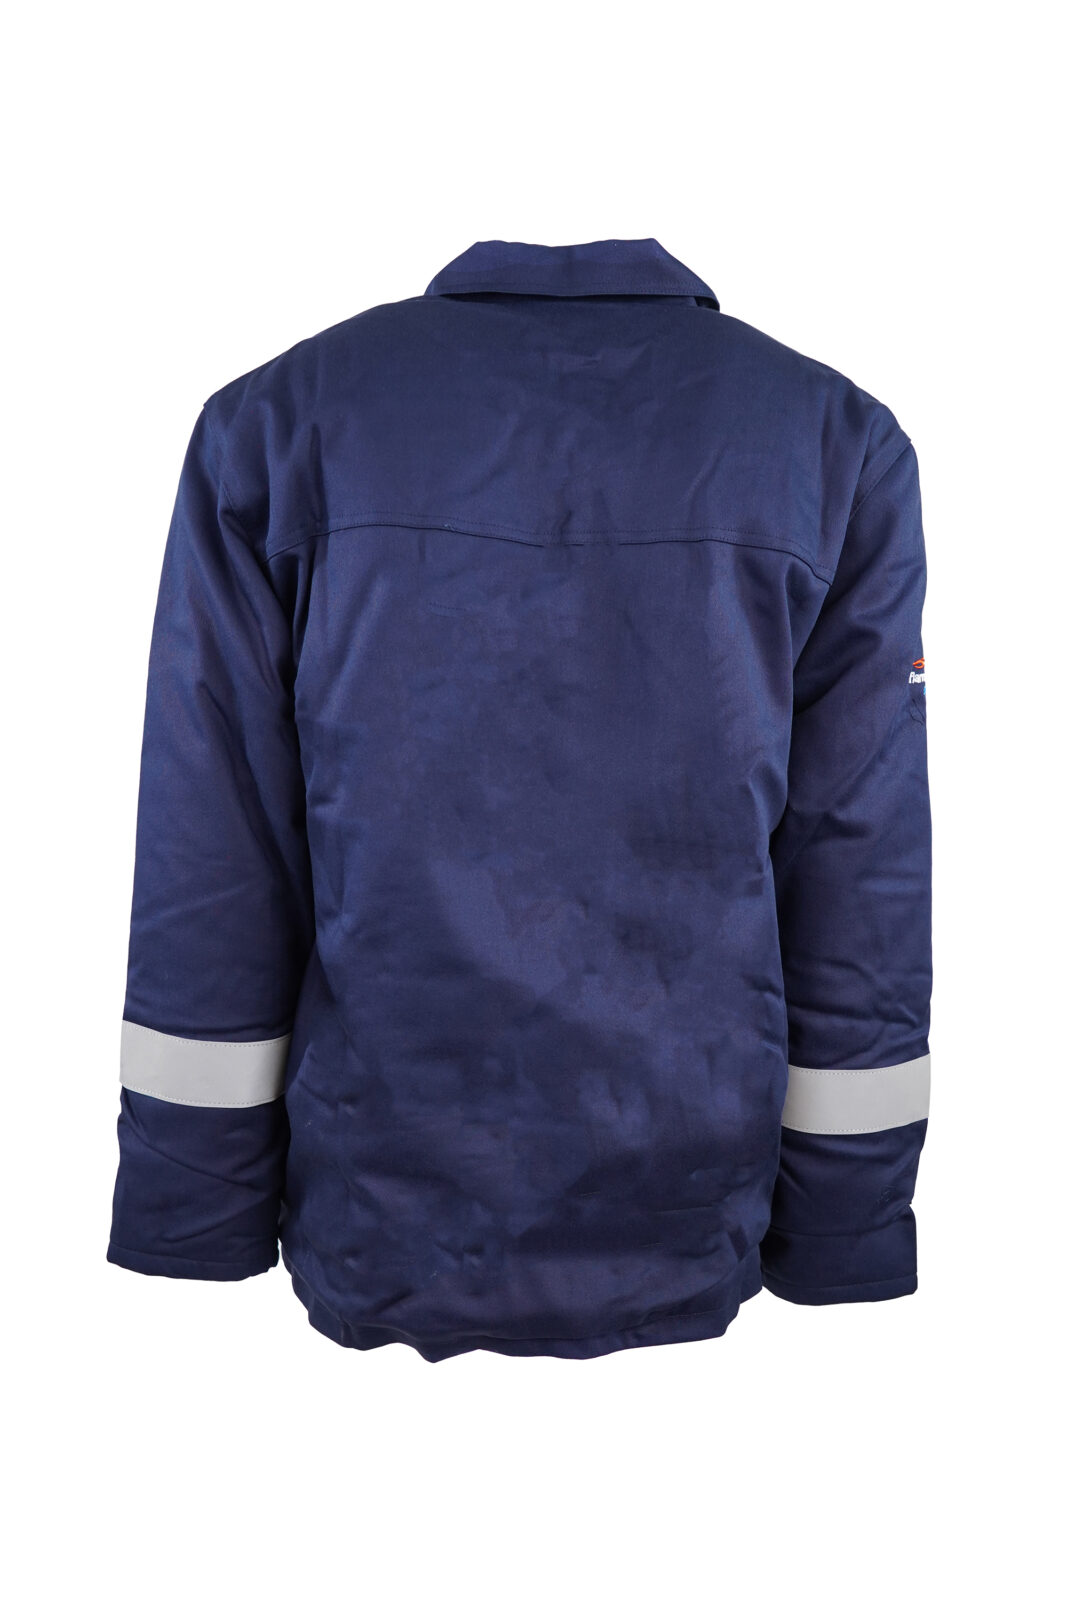 Endurance Workwear Sasol Spec D59 Flame & Acid Thermal Jacket - Santon ...